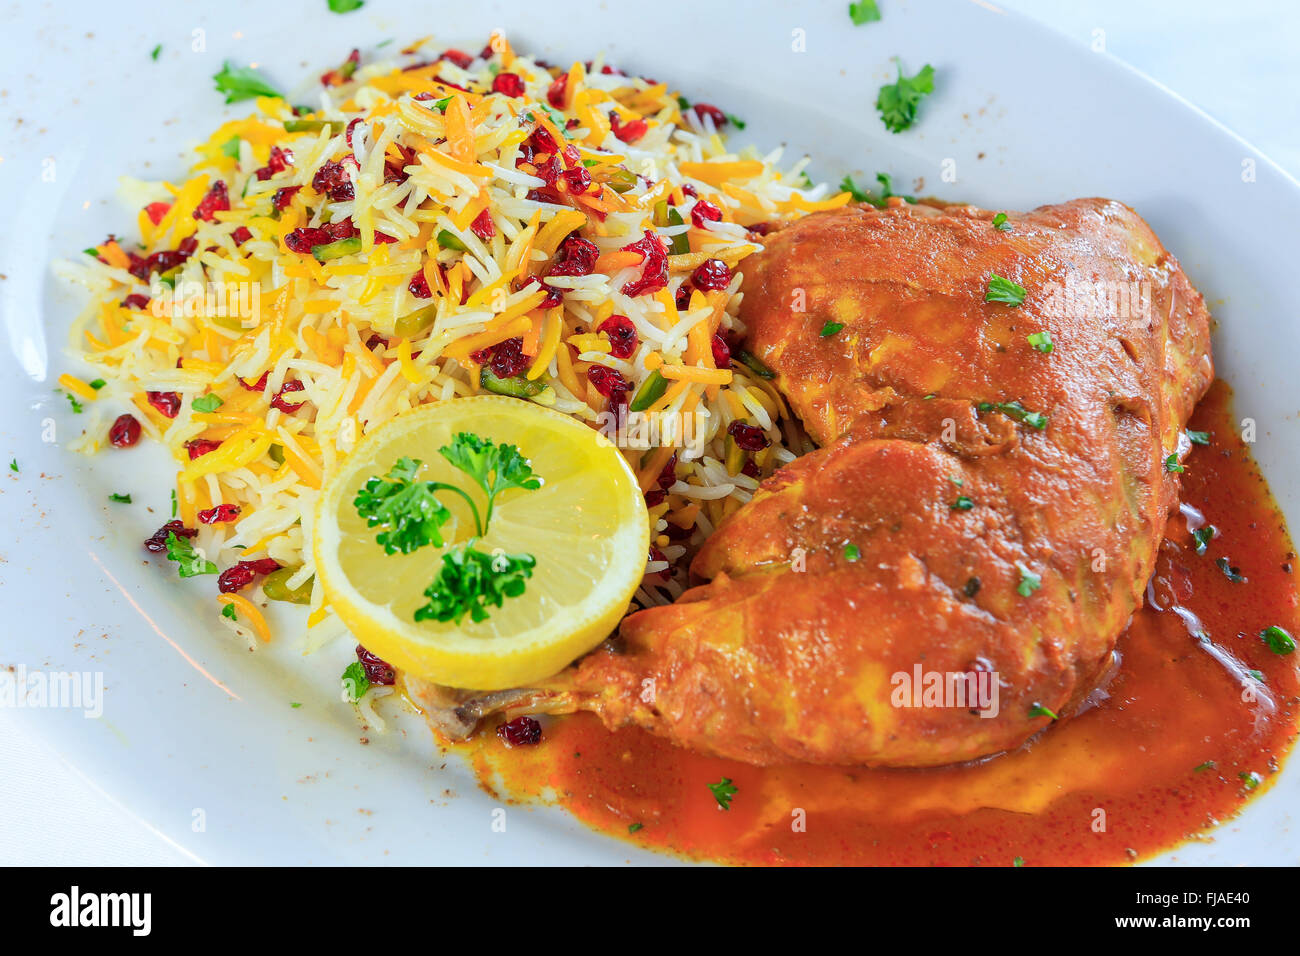 Persische/iranische Essen Stockfoto